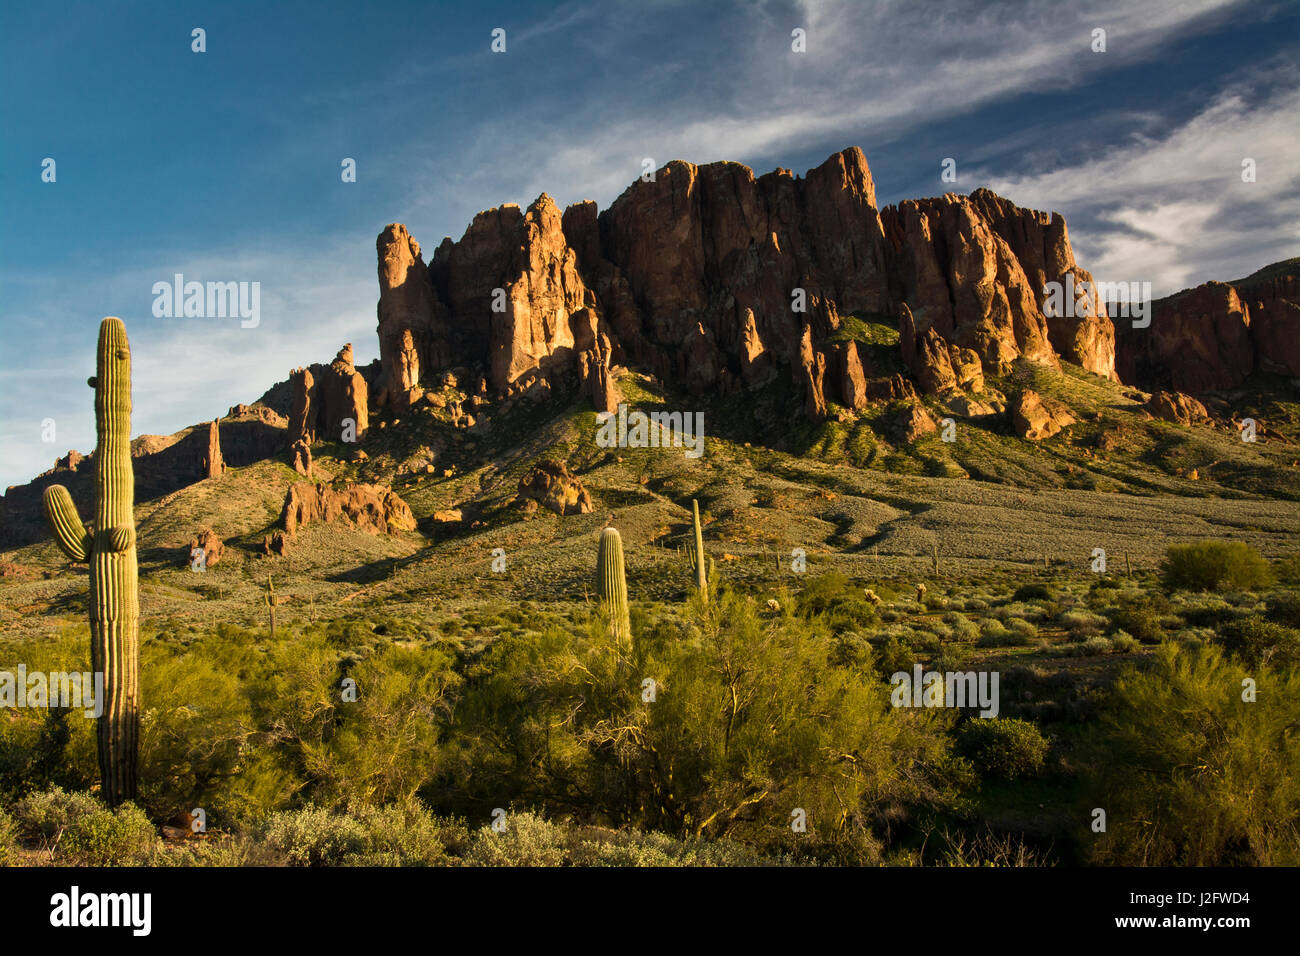 Sunset, Flat Iron Mountain, Lost Dutchman State Park, Apache Junction, Arizona, USA Stock Photo